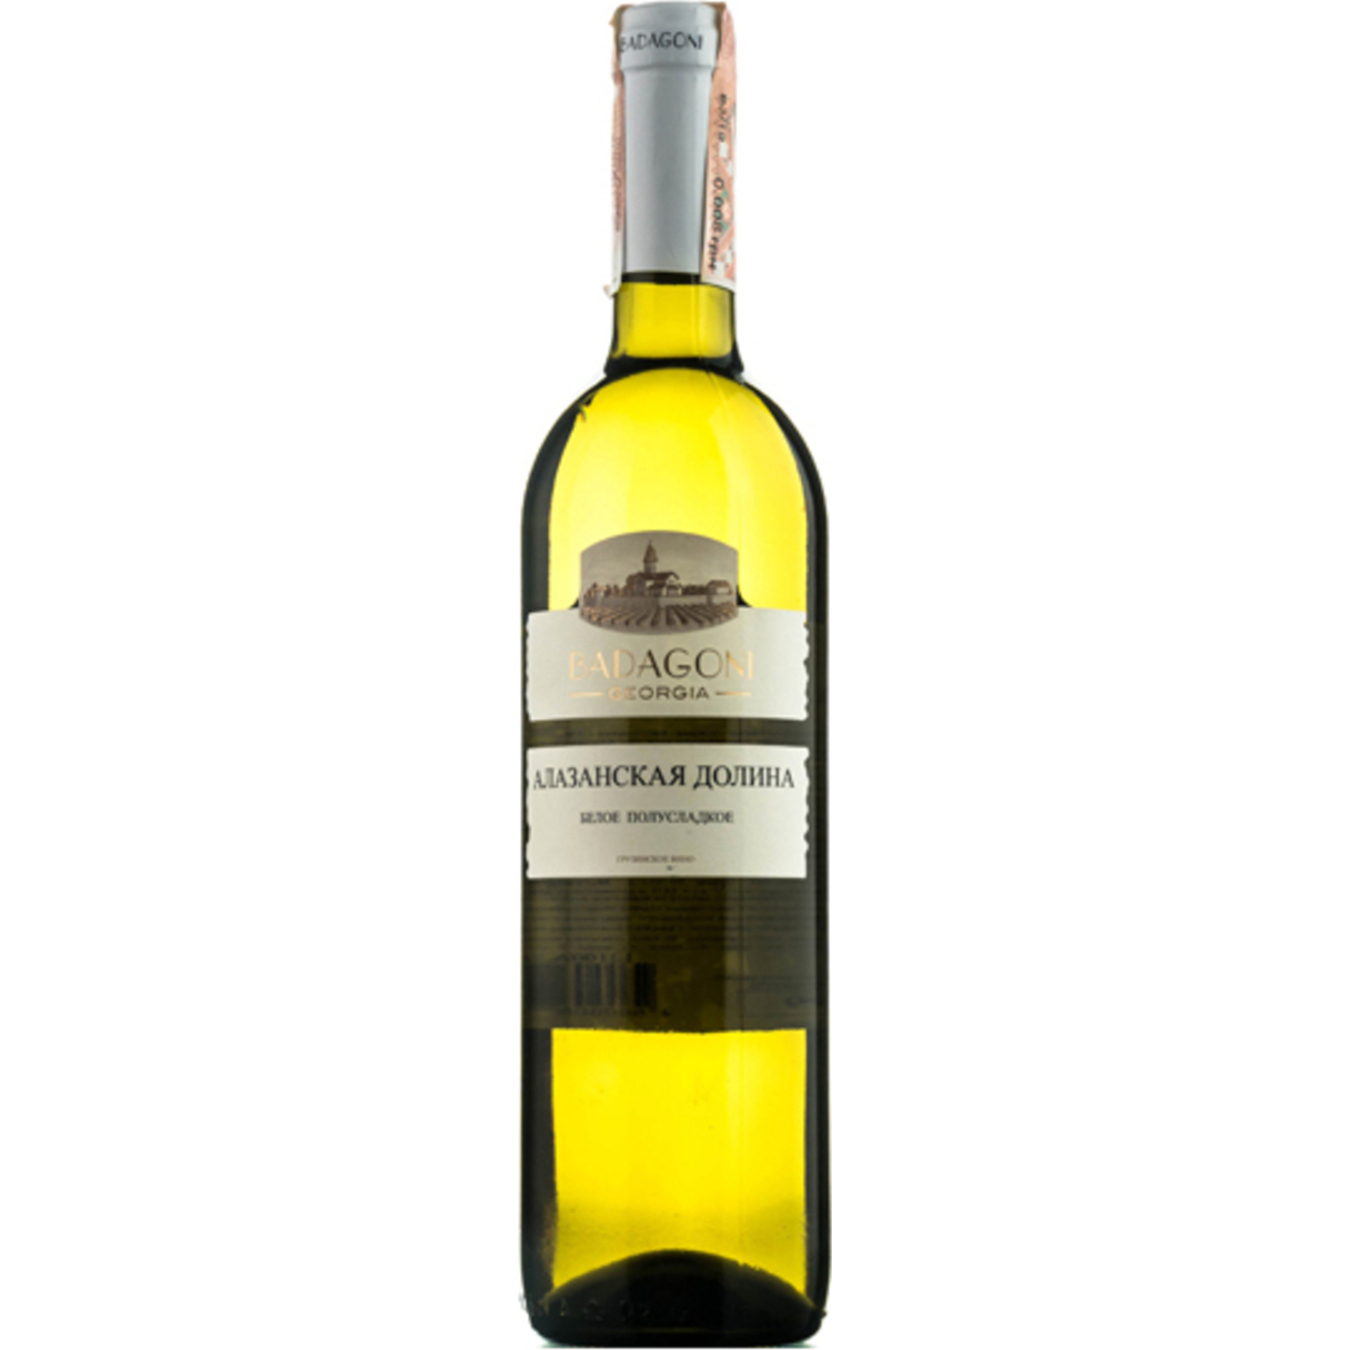 Badagoni Alazana Valley white semi-sweet wine 10% 0.75 l